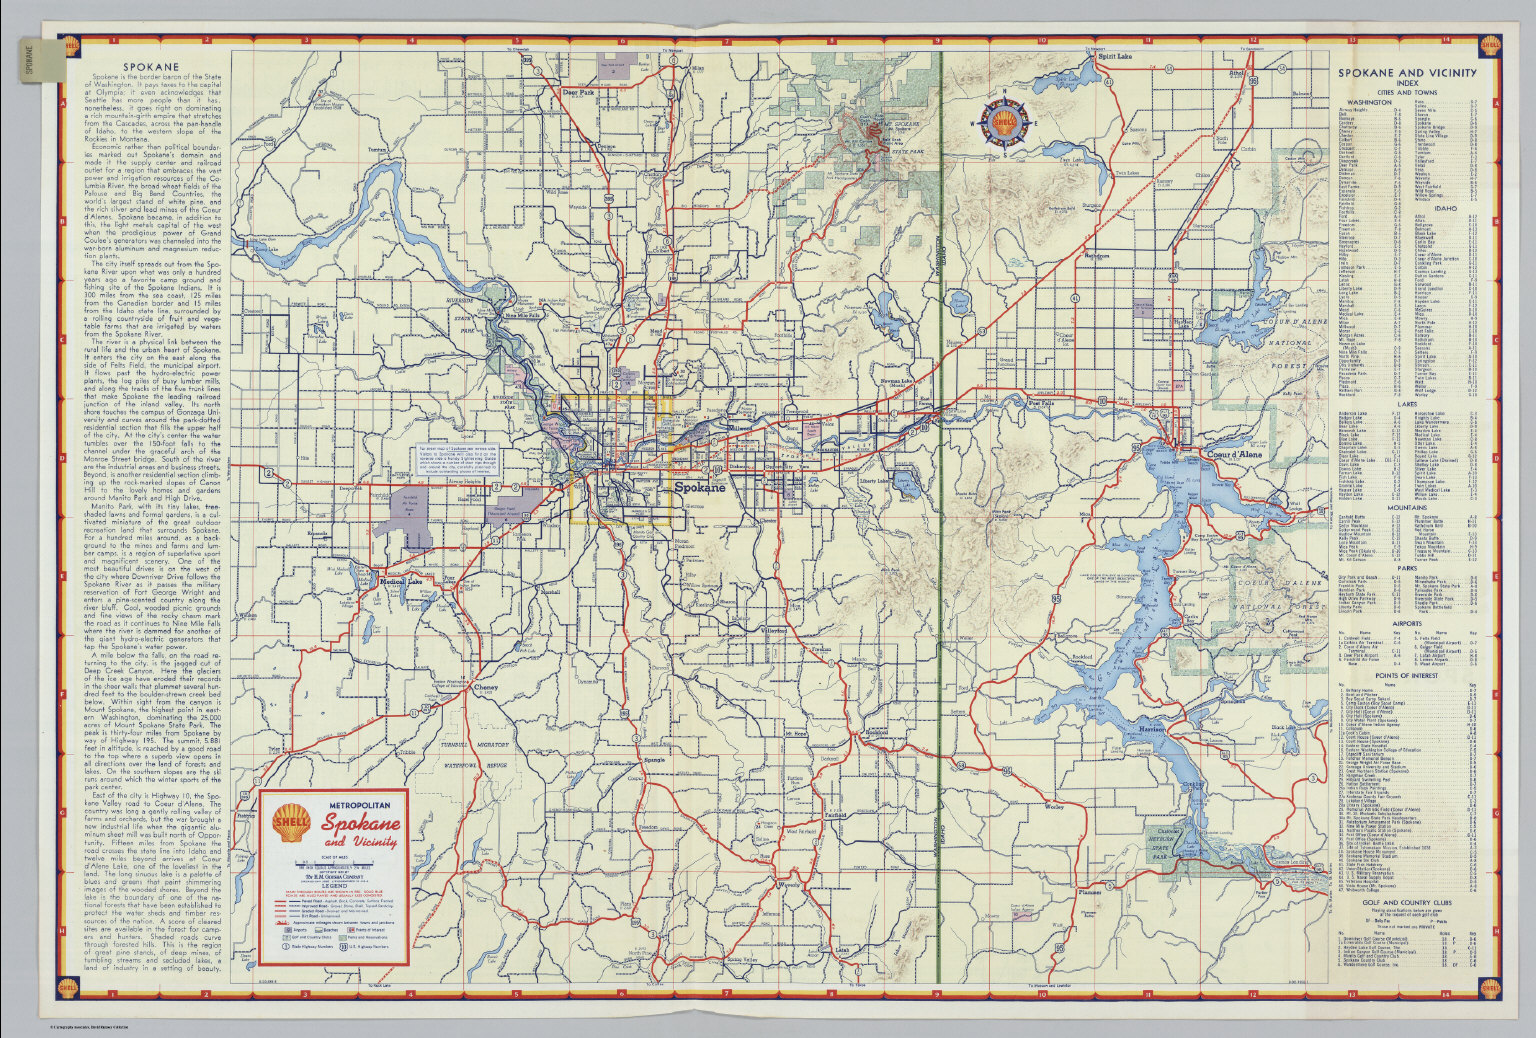 Spokane county assessor map